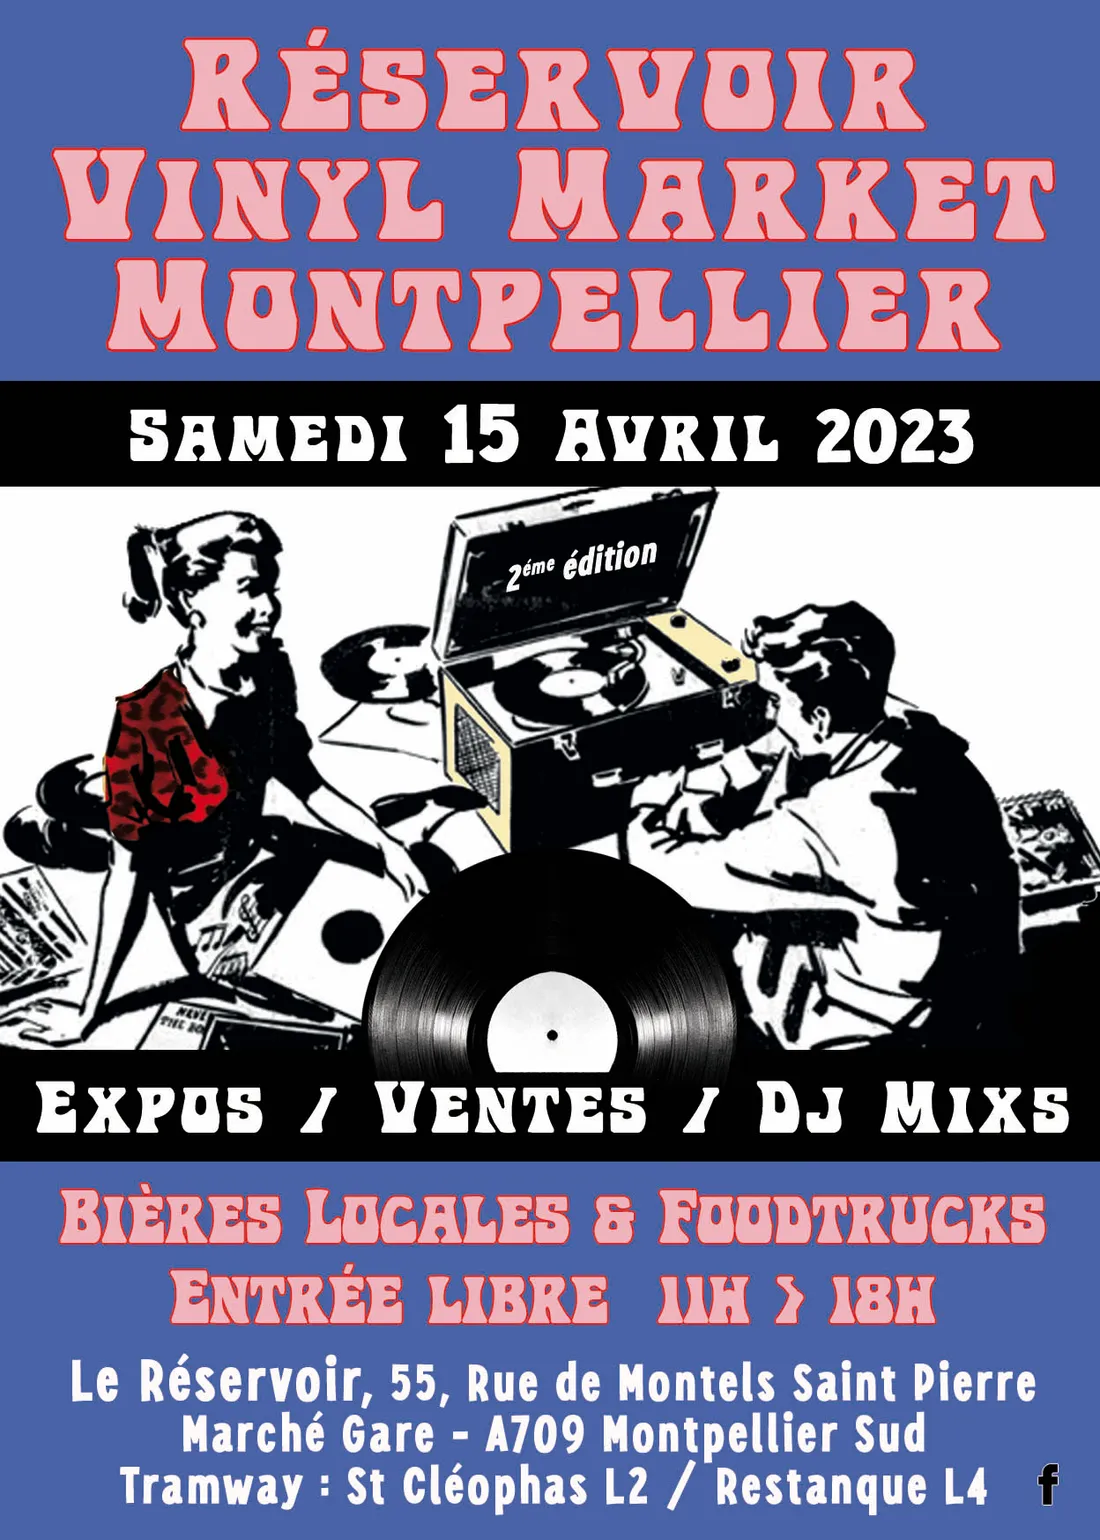 Réservoir Vinyle Market Montpellier